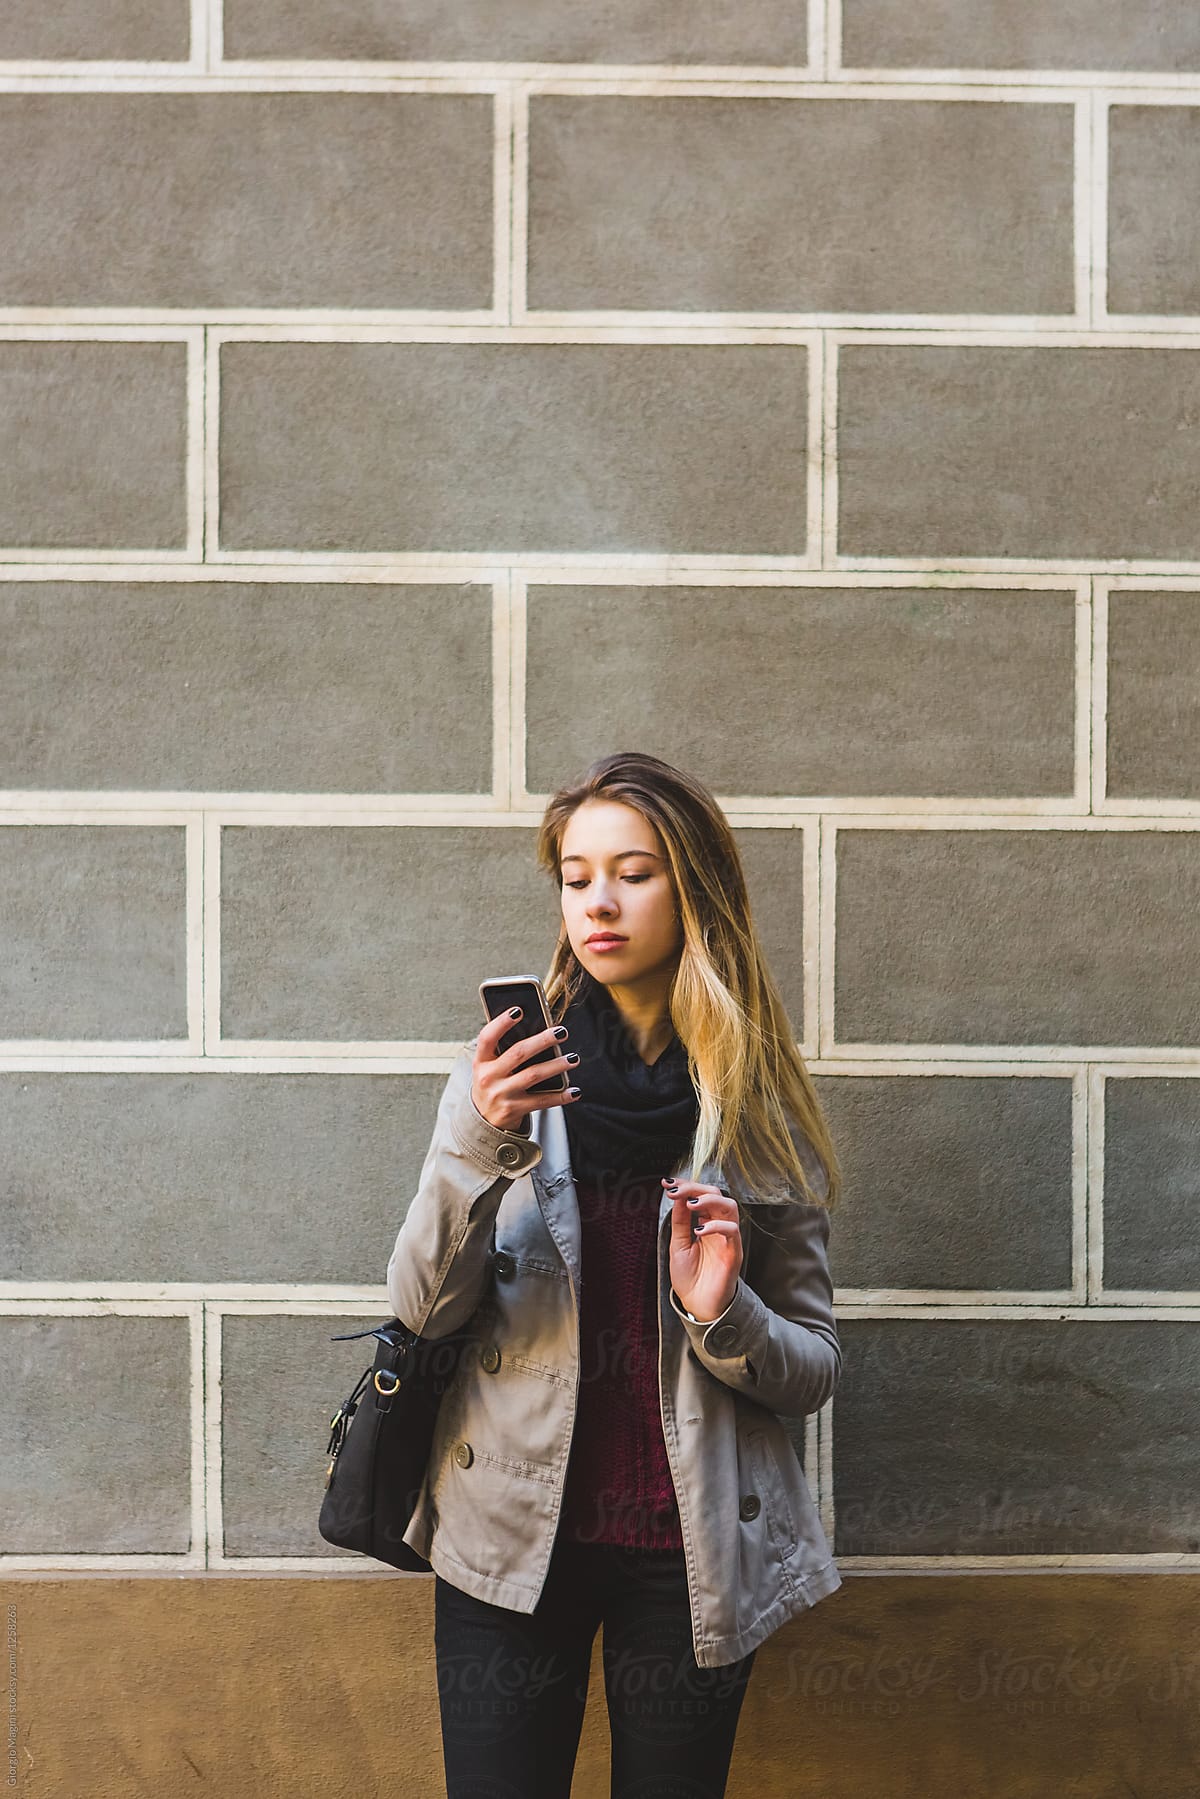 Teenage Girl in Urban Area Using a Mobile Phone